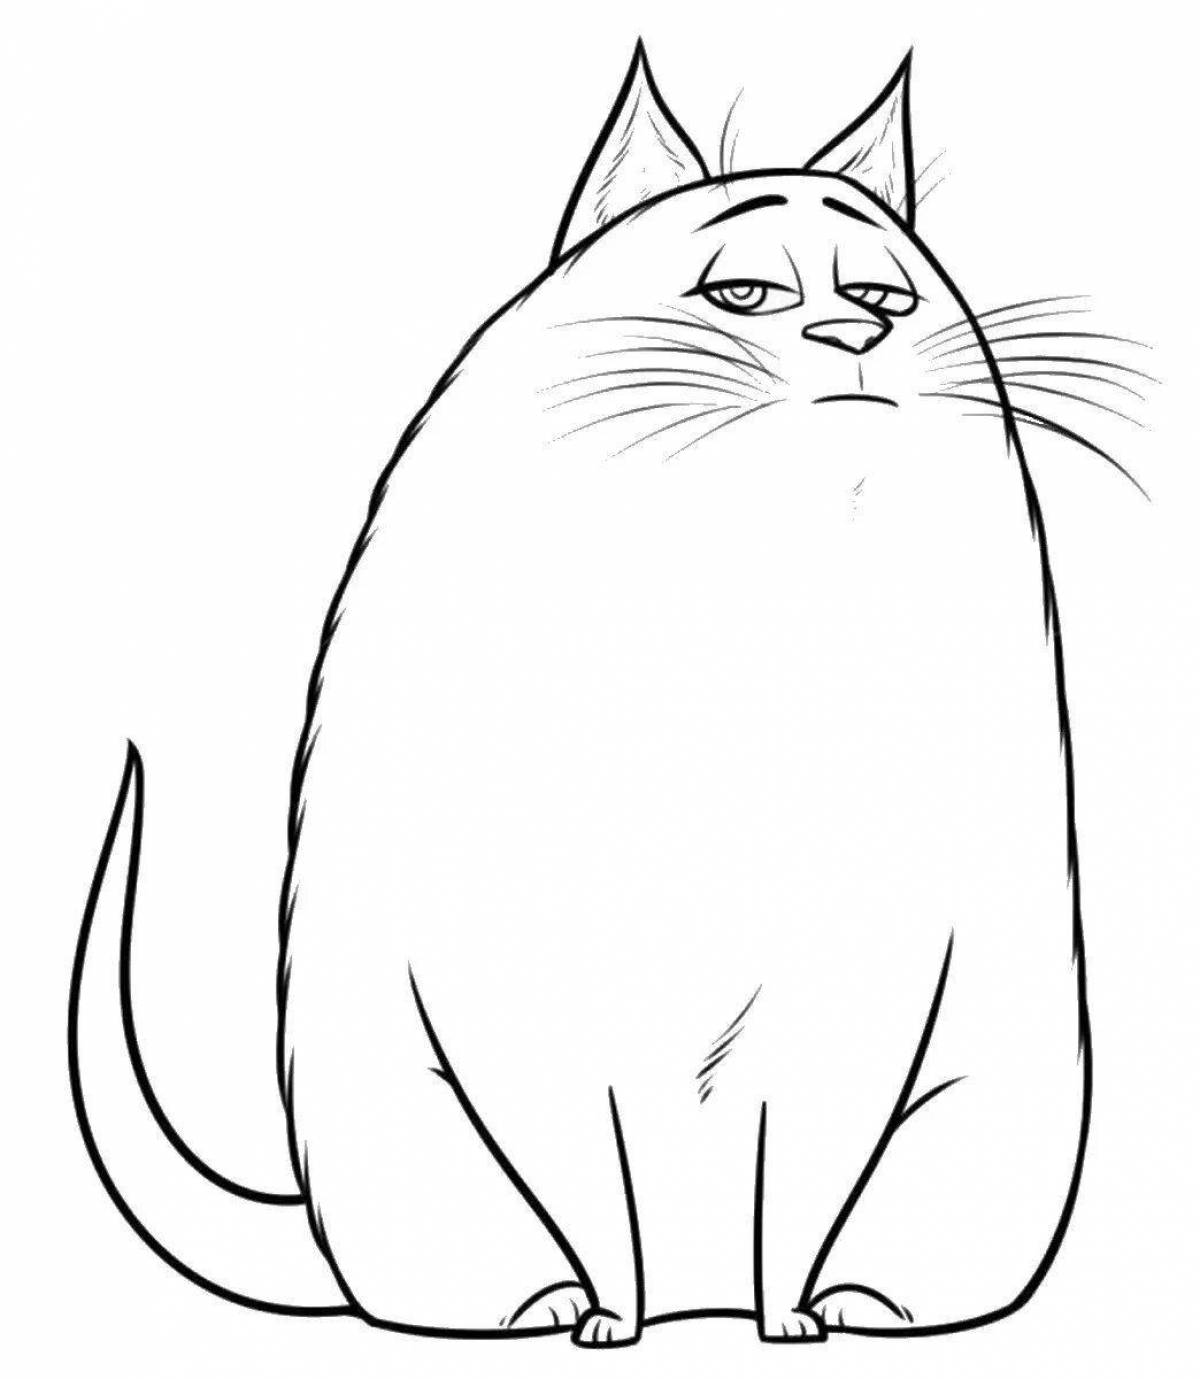 Fat cat #6